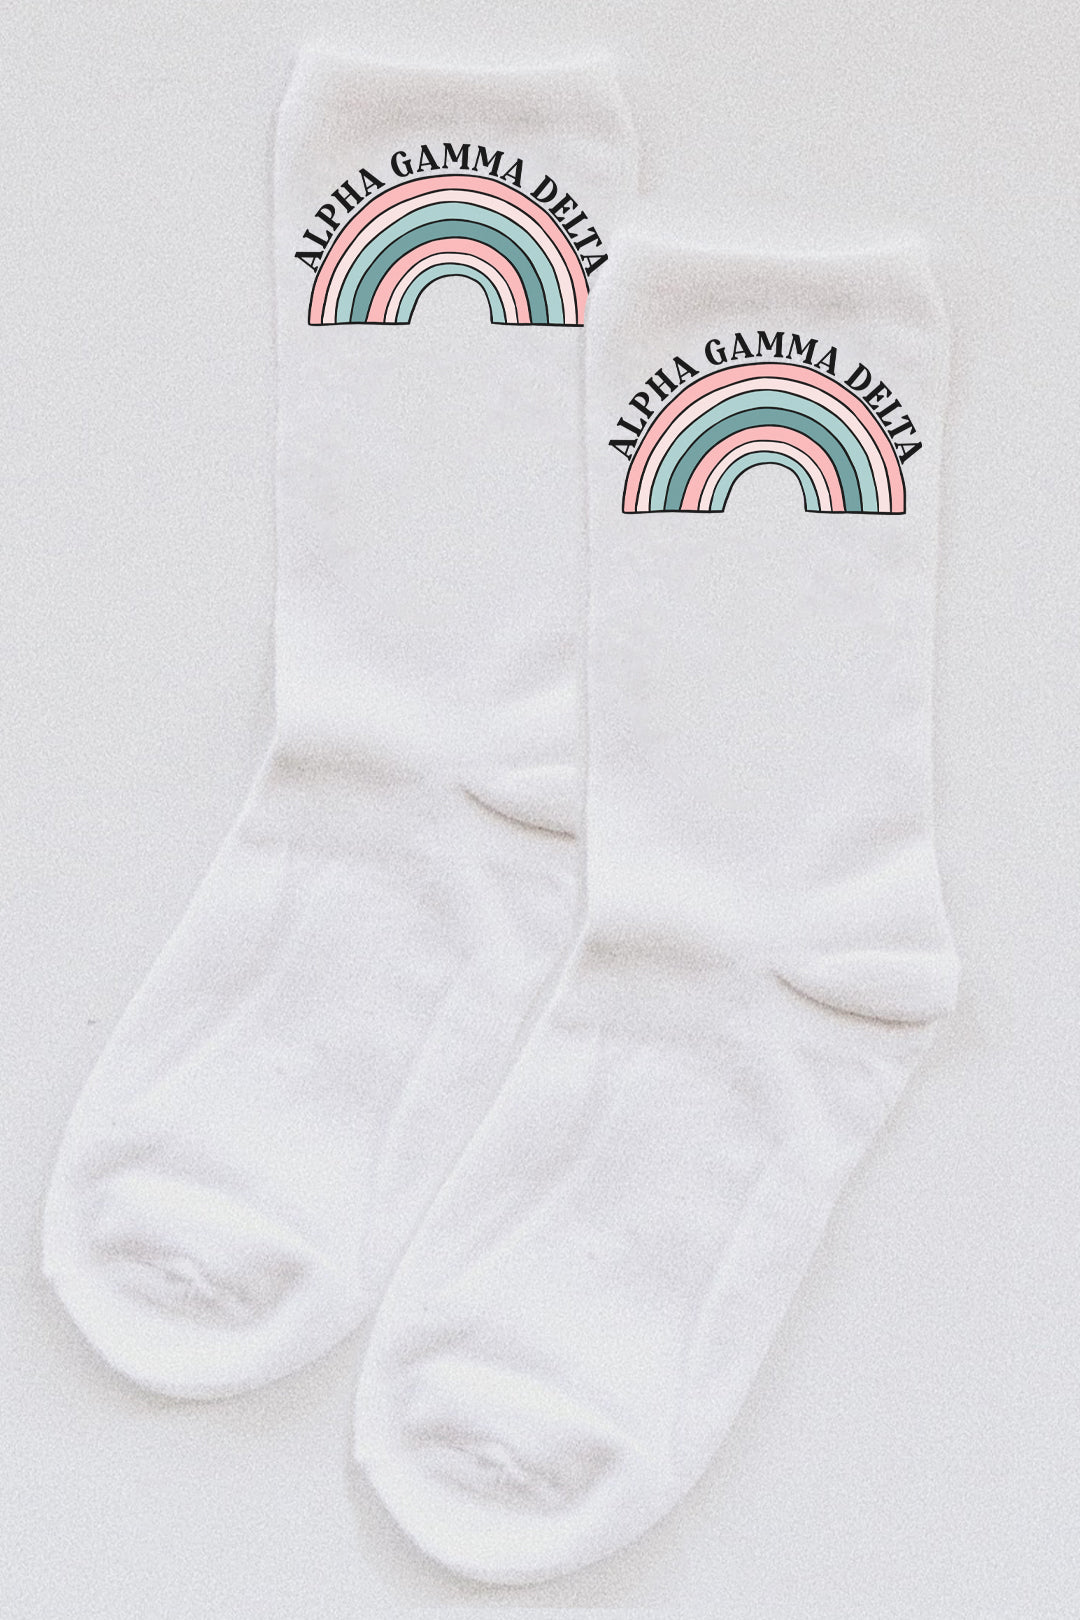 Rainbow socks - Alpha Gamma Delta - Spikes and Seams Greek